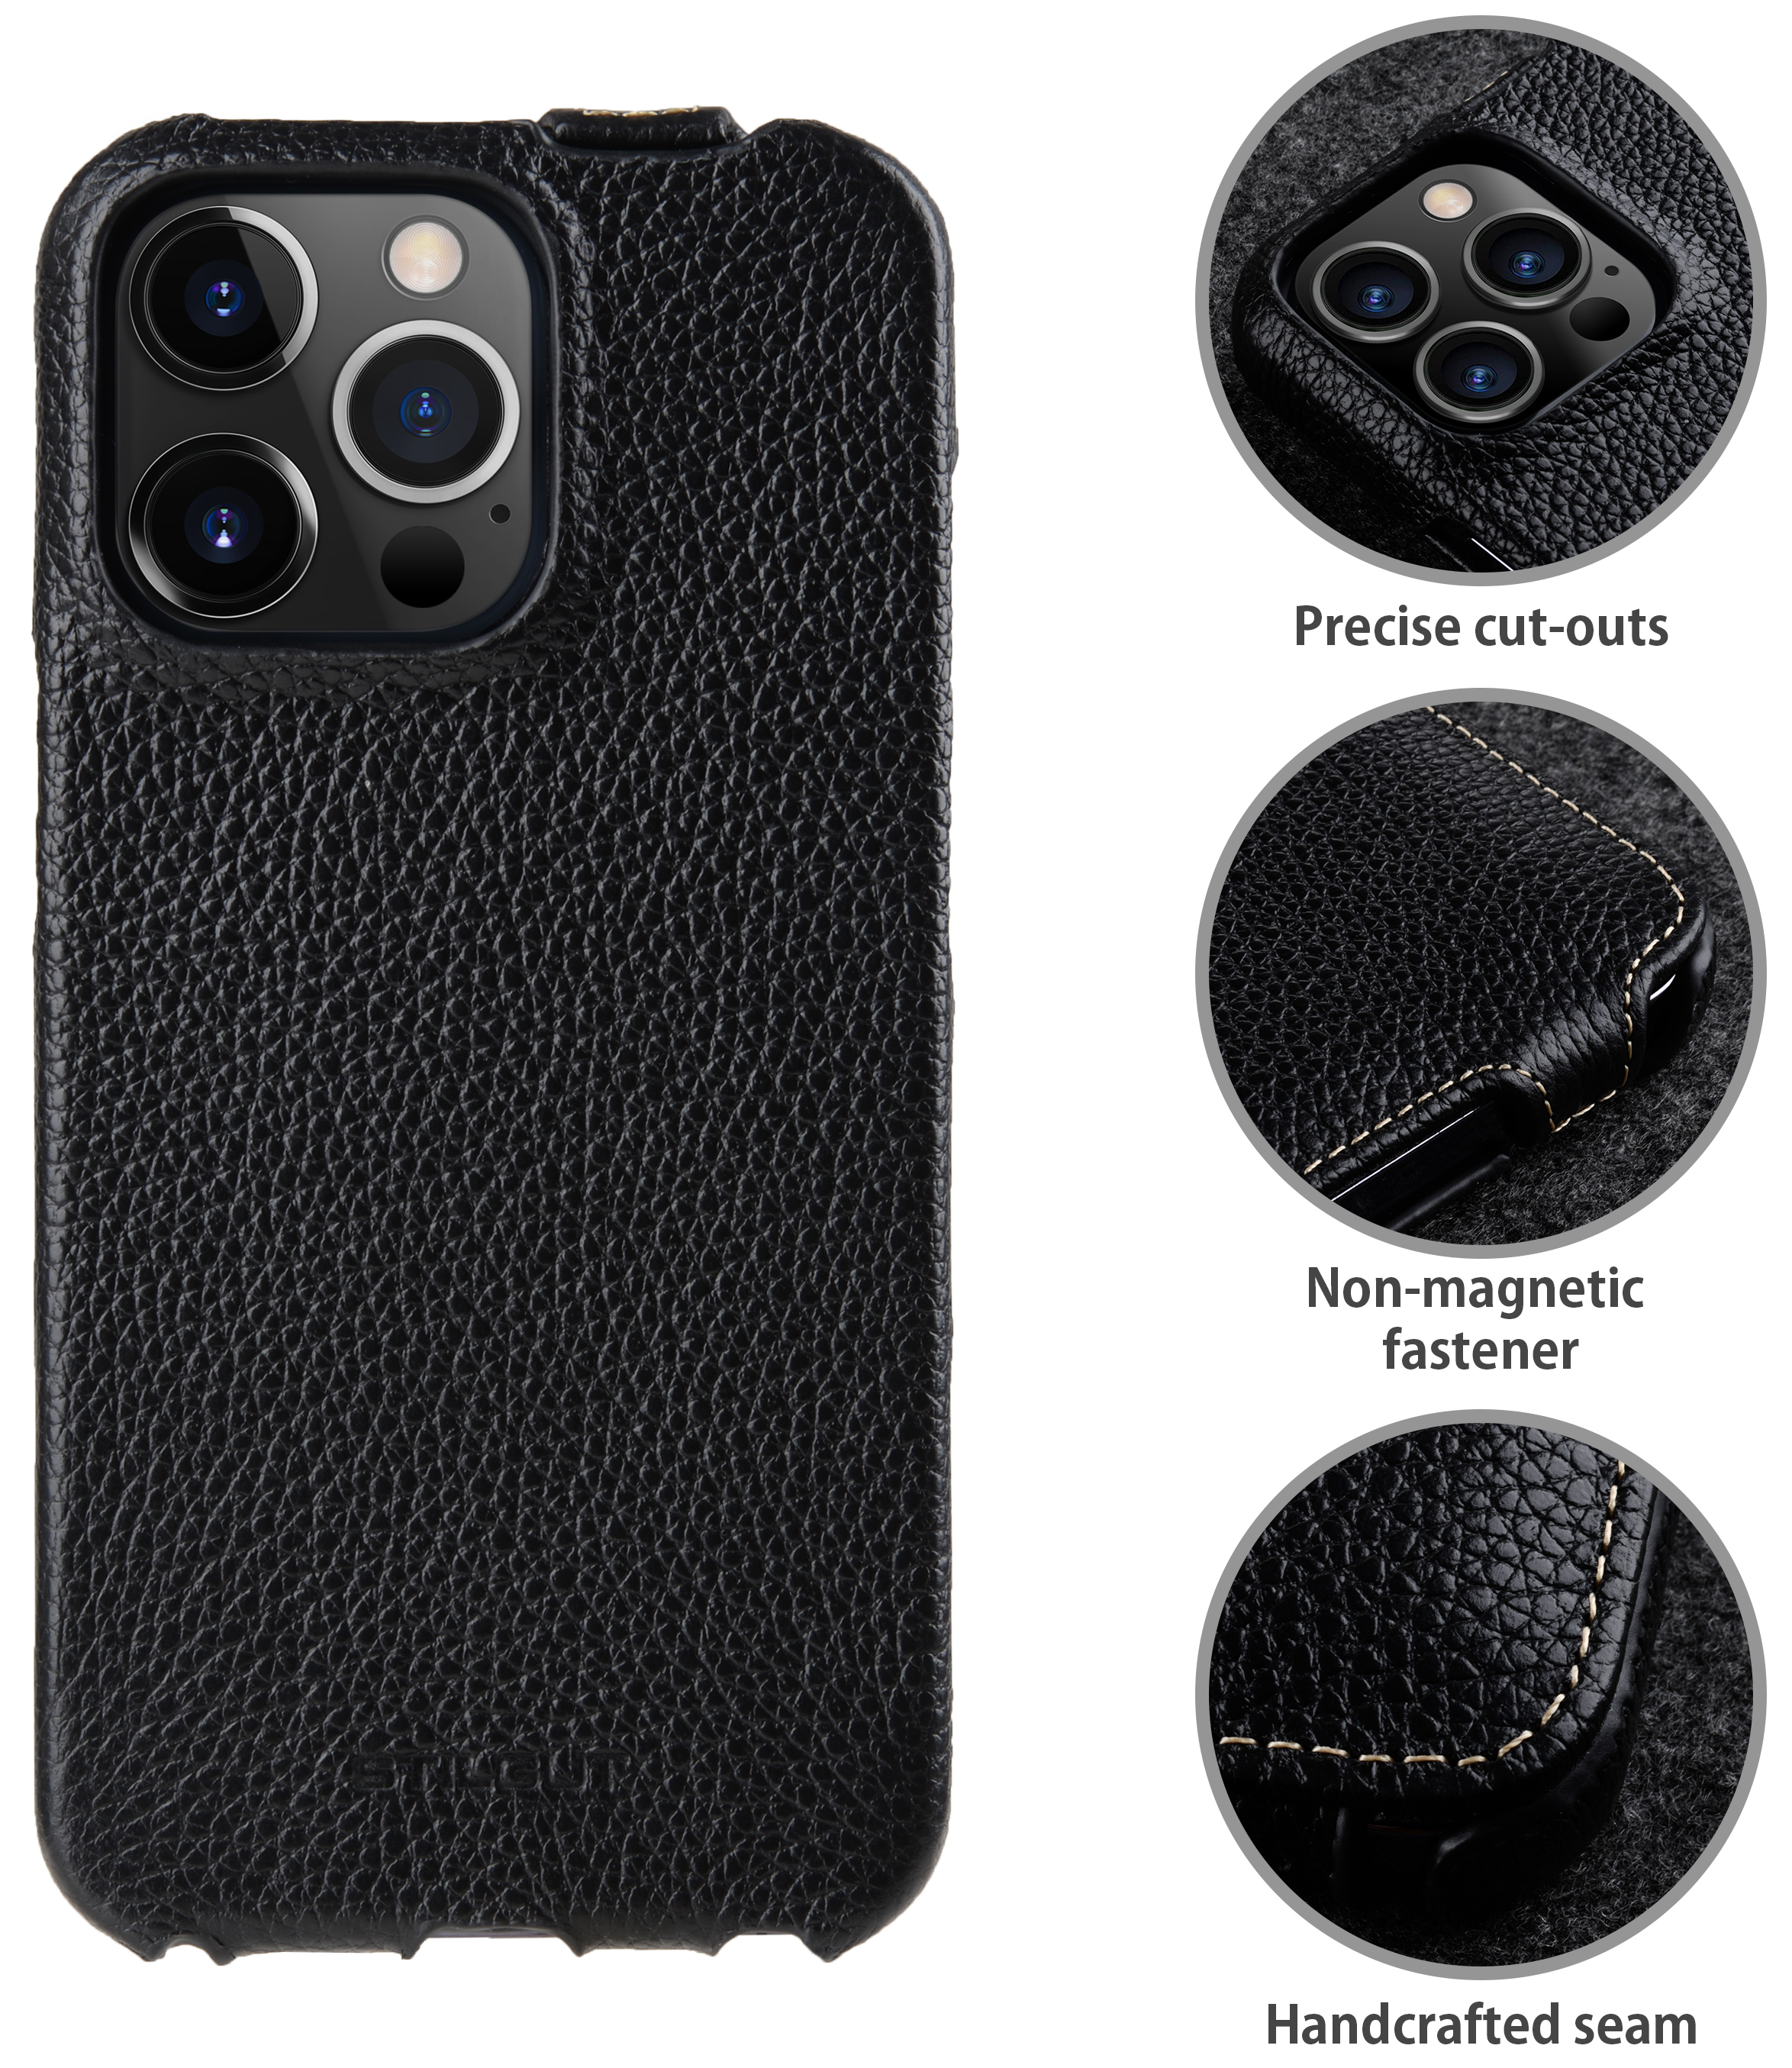 Klapphülle Schwarz Nappa Handyhülle 6.7“ iPhone 13 Pro Max Flip Case aus Leder Lederhülle StilGut UltraSlim kompatibel mit iPhone 13 Pro Max Hülle